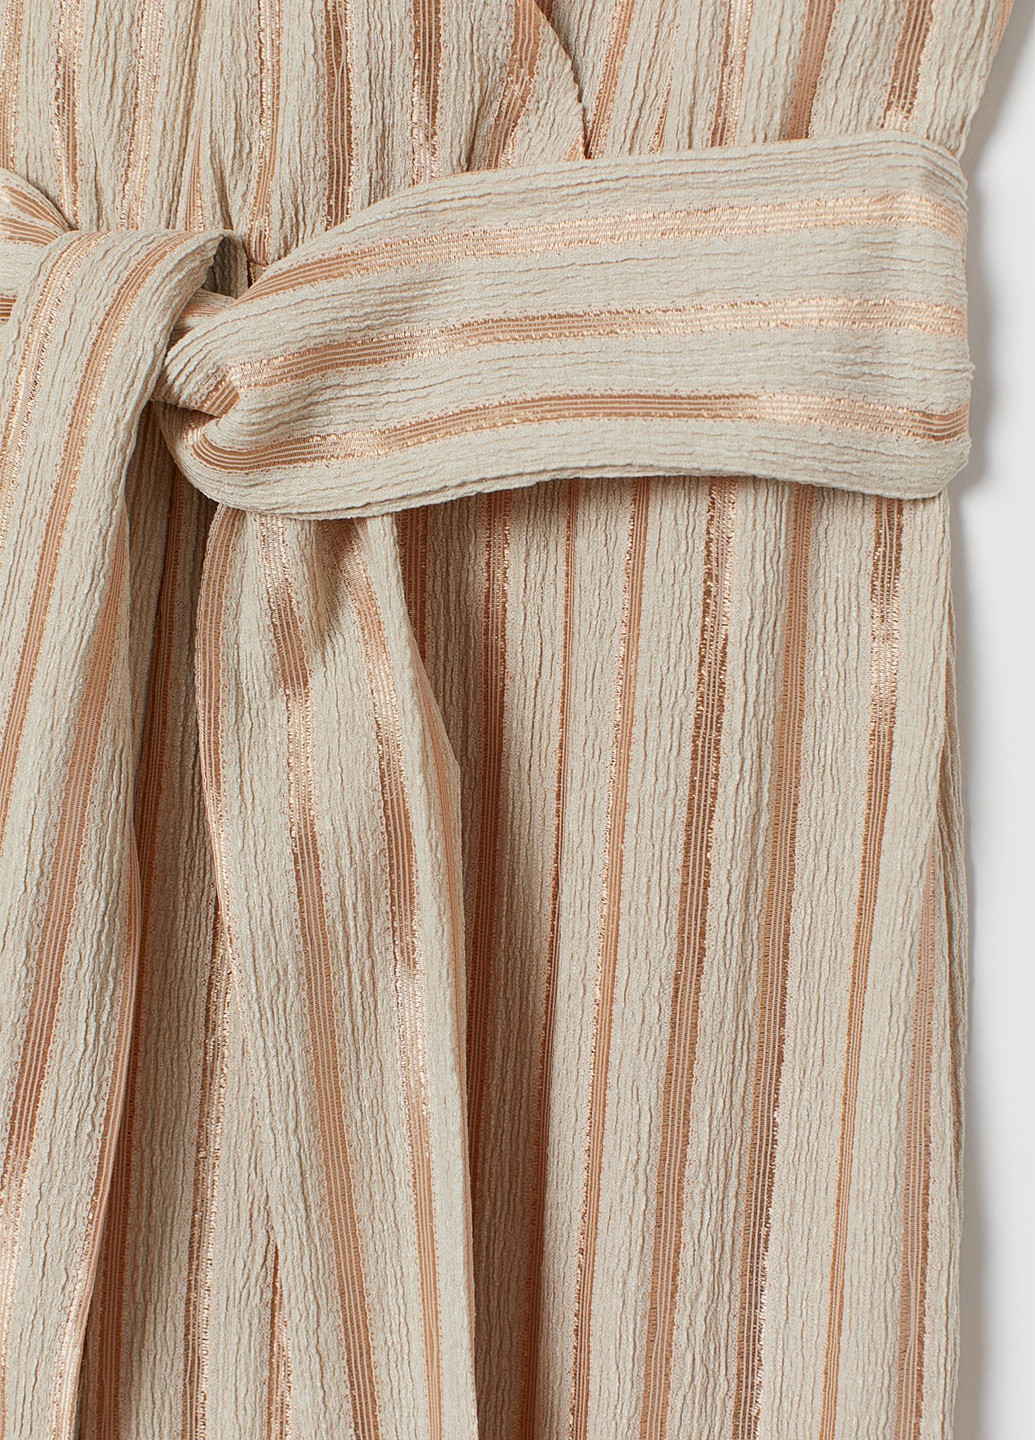 Комбинезон H&M комбинезон-брюки полоска бежевый кэжуал полиэстер, трикотаж